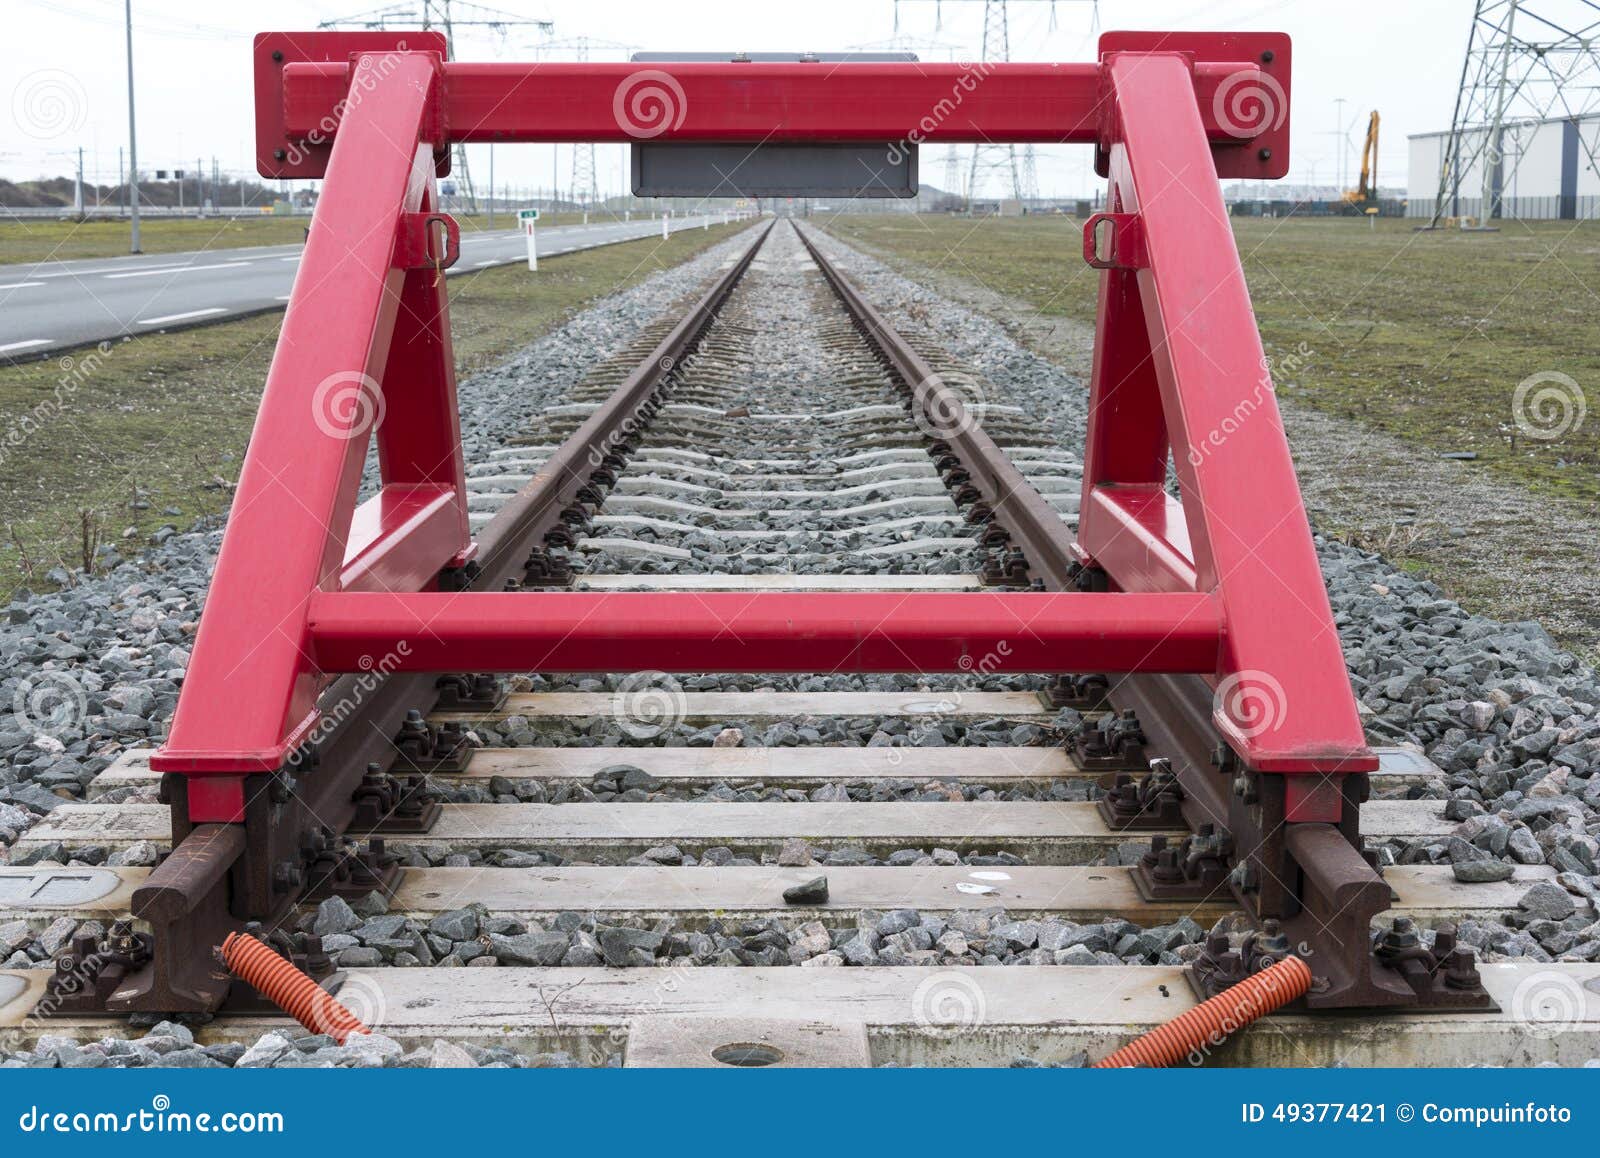 red railroad buffer